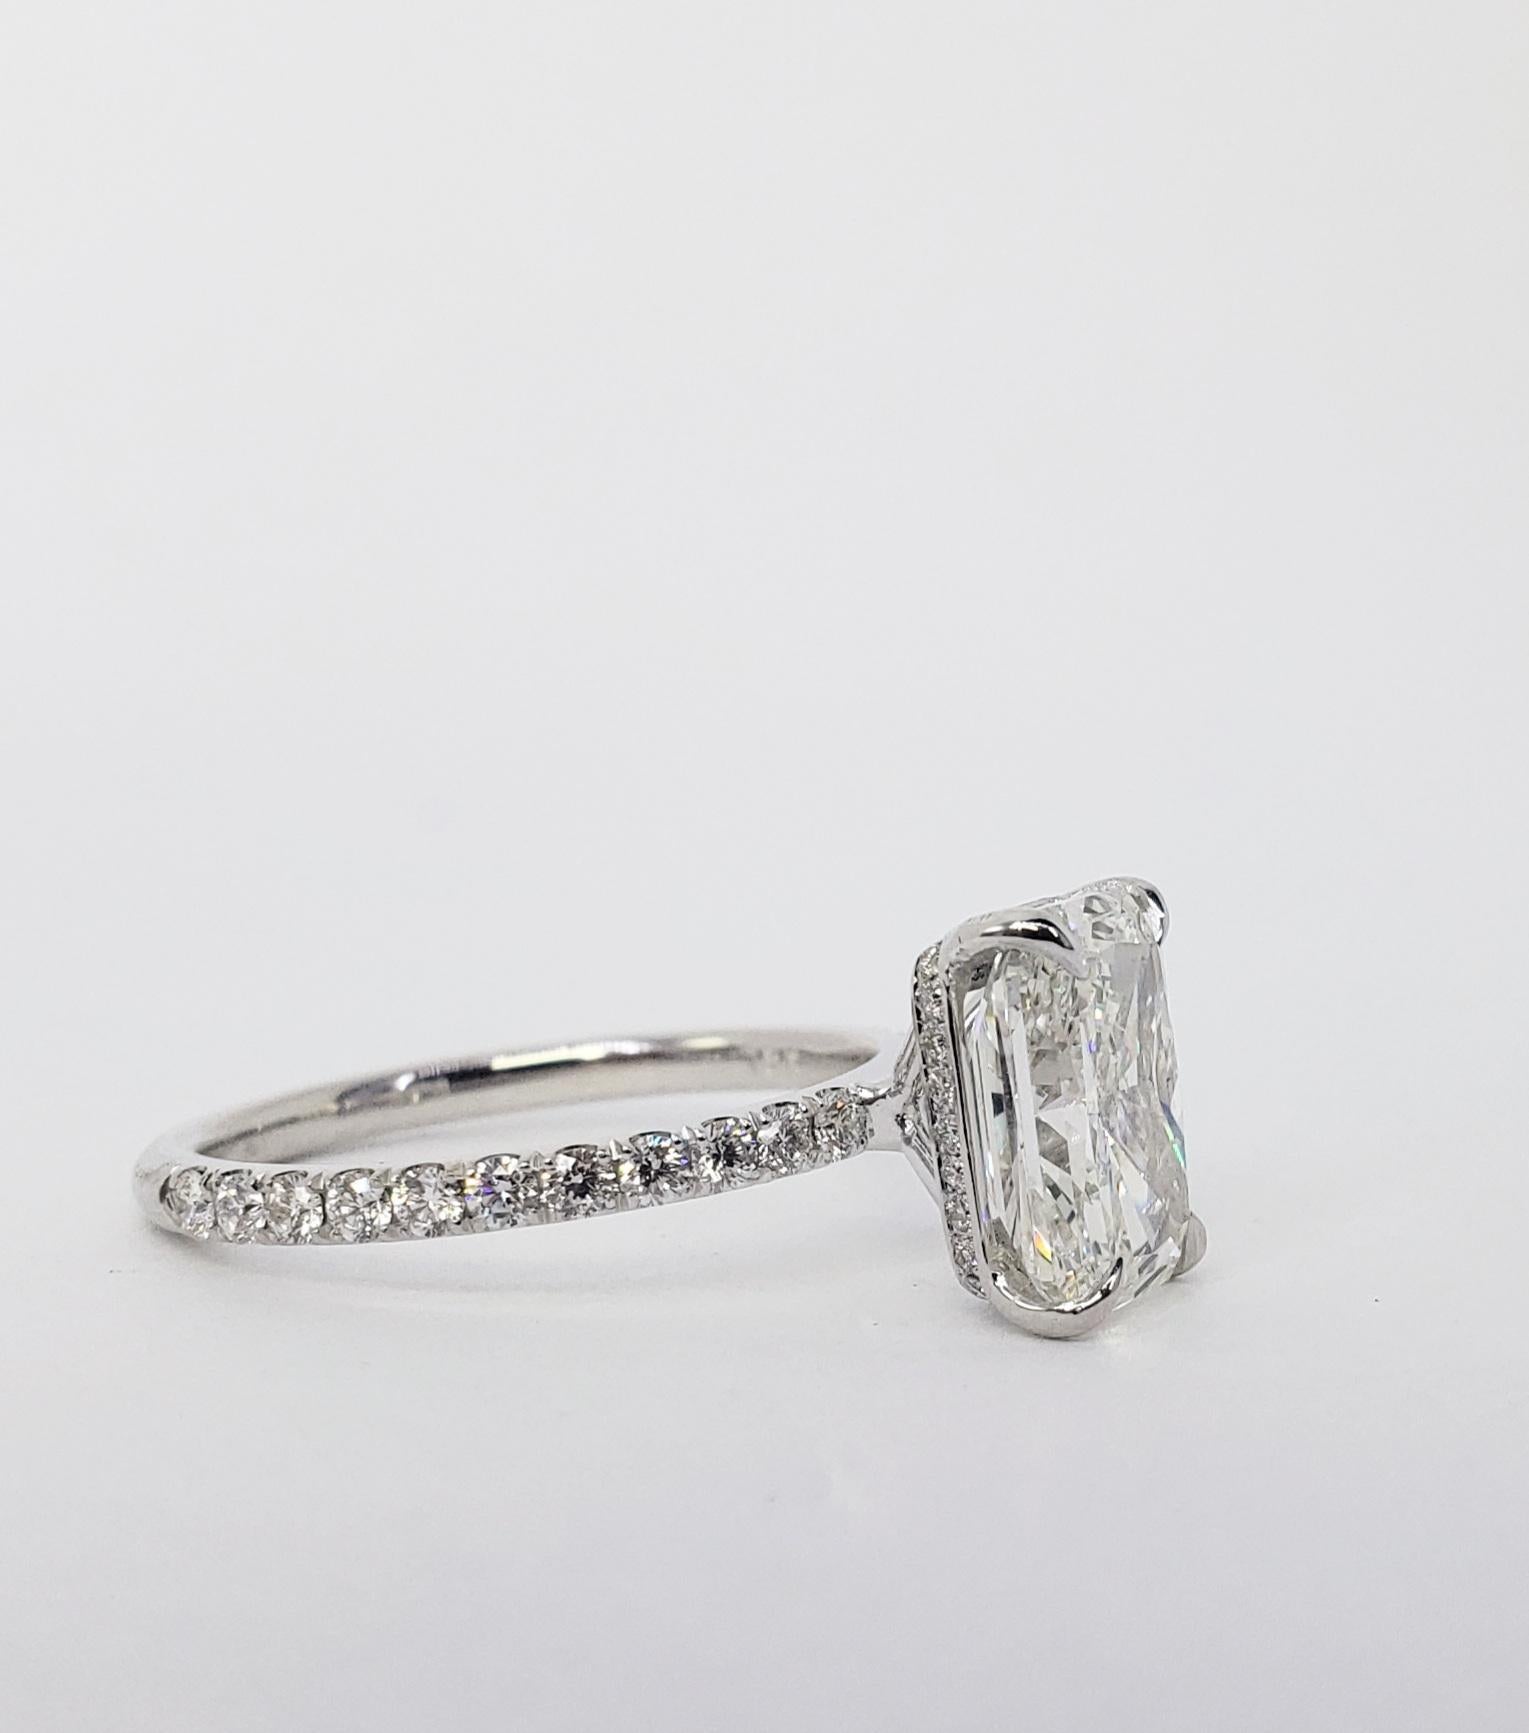 Modern David Rosenberg 3.02 Radiant Cut I/SI2 GIA Diamond Engagement Ring